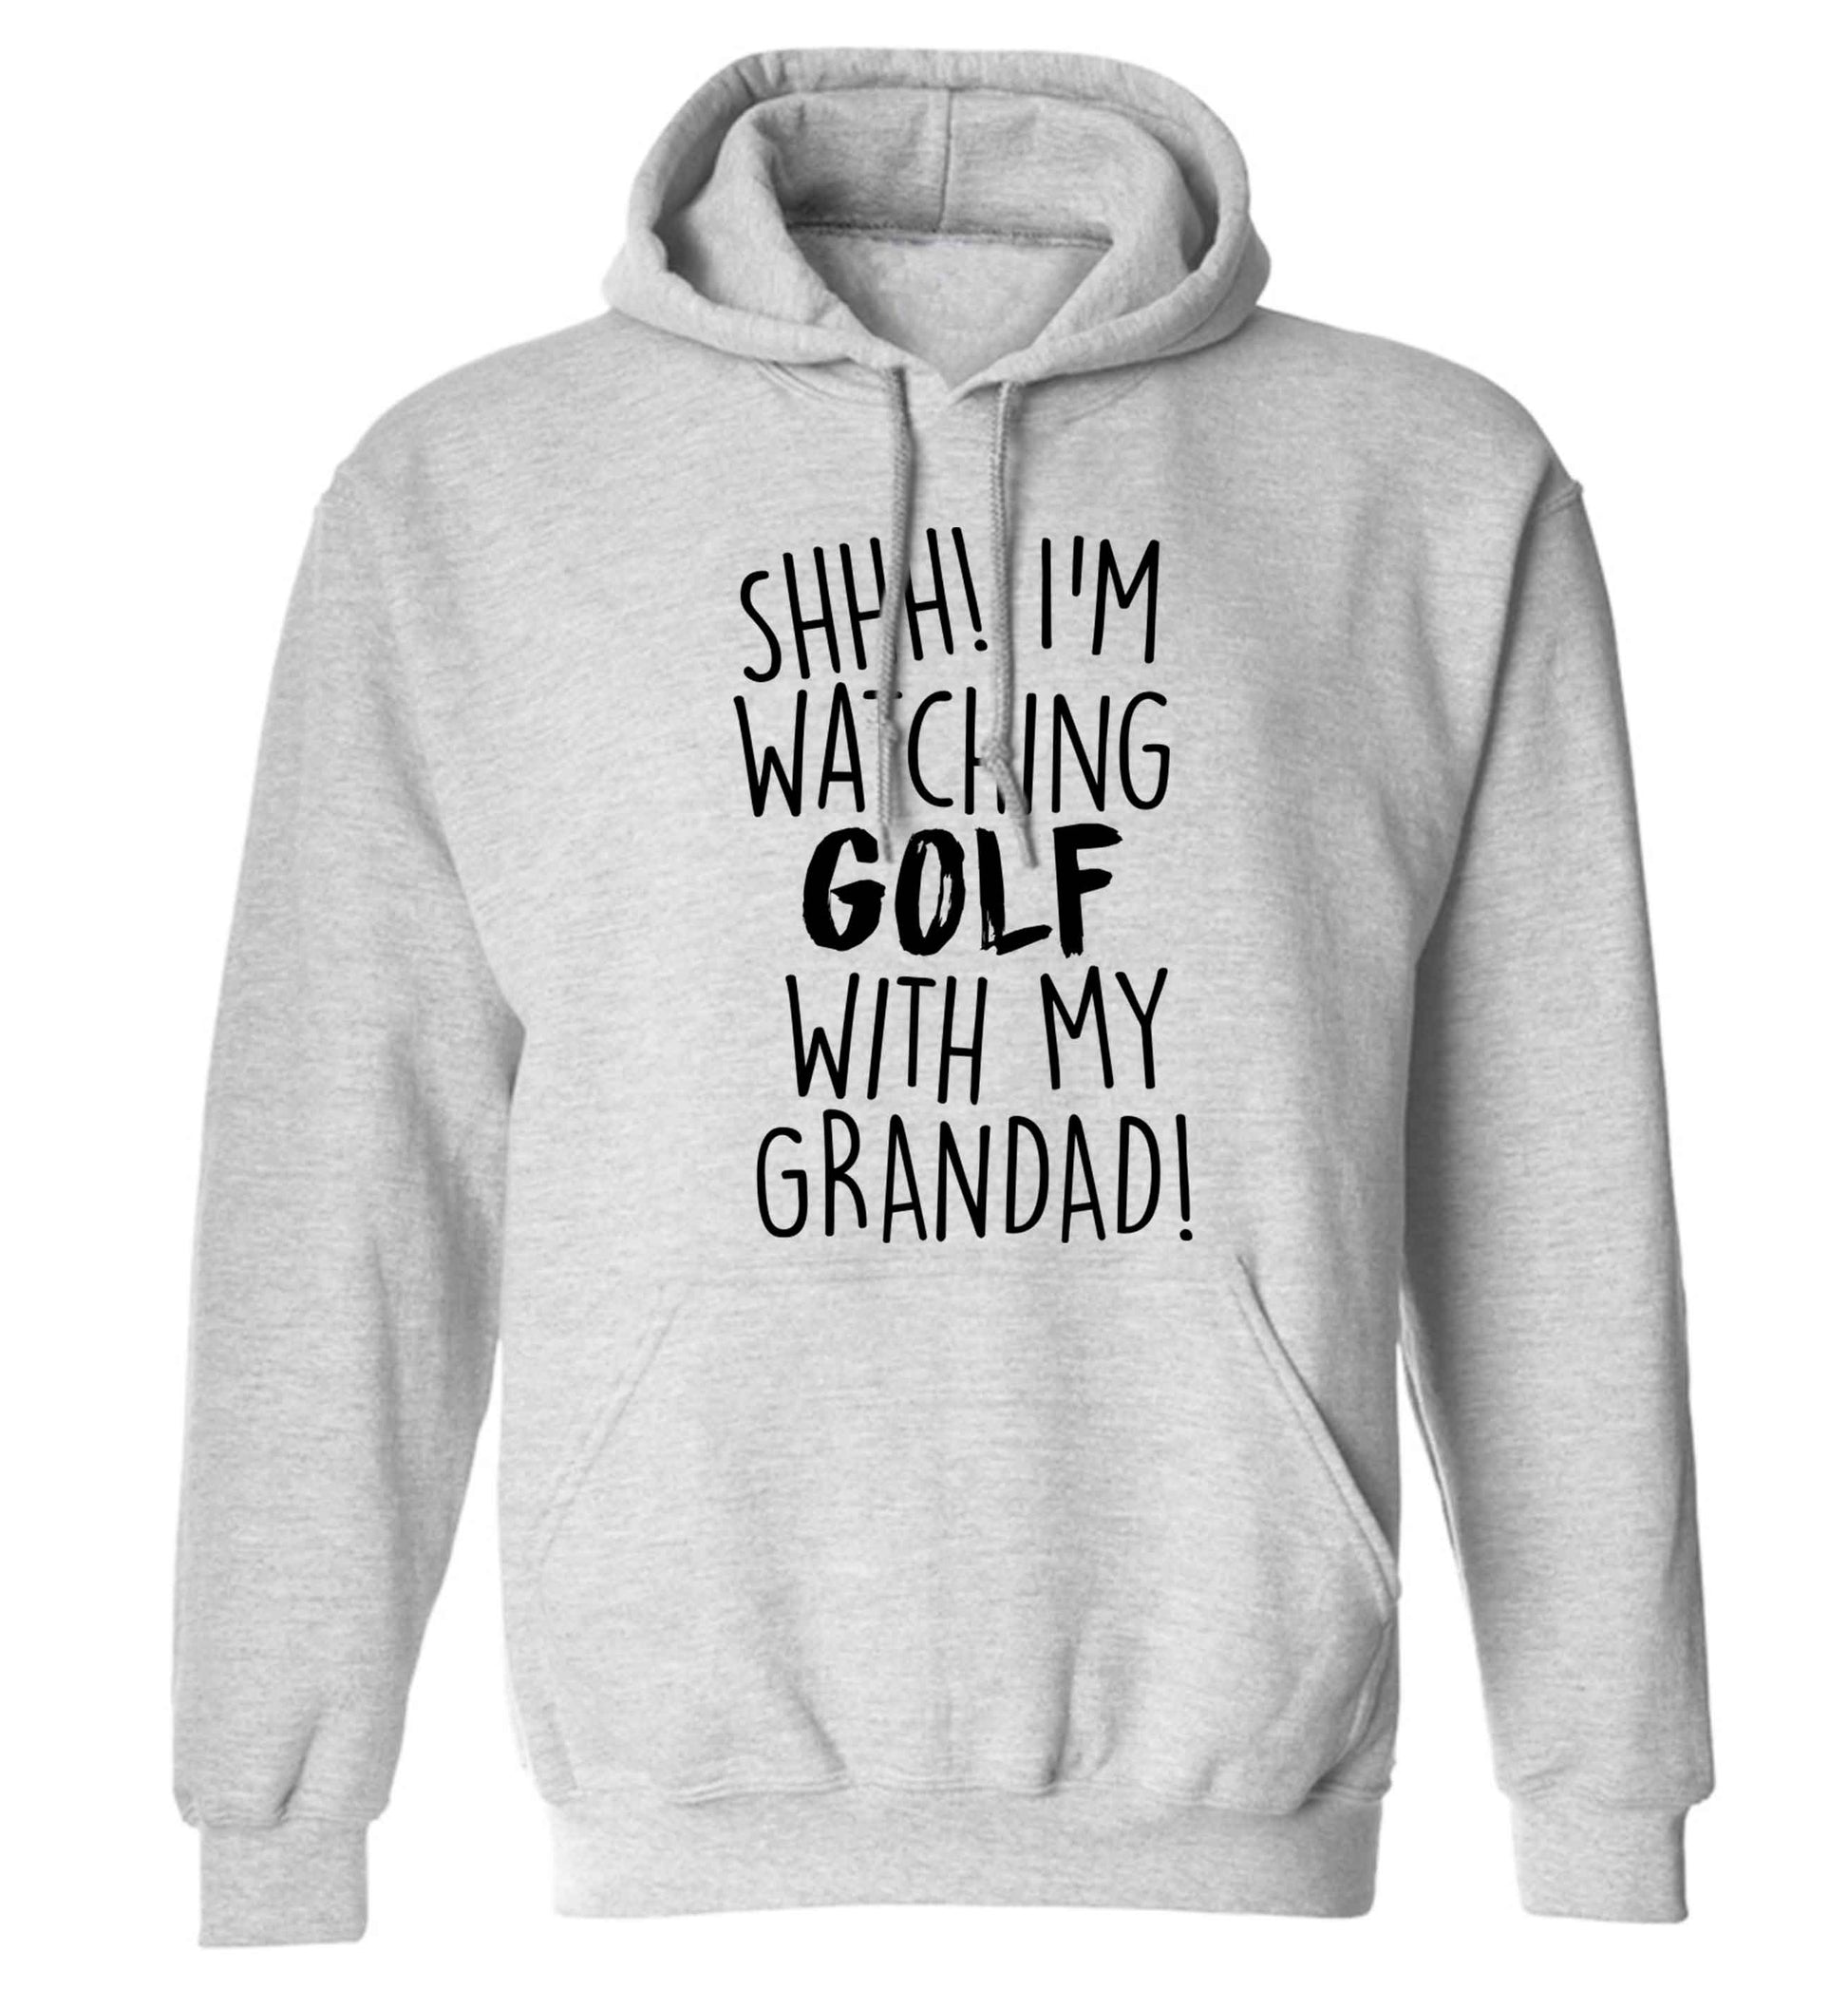 Shh I'm watching golf with my grandad adults unisex grey hoodie 2XL